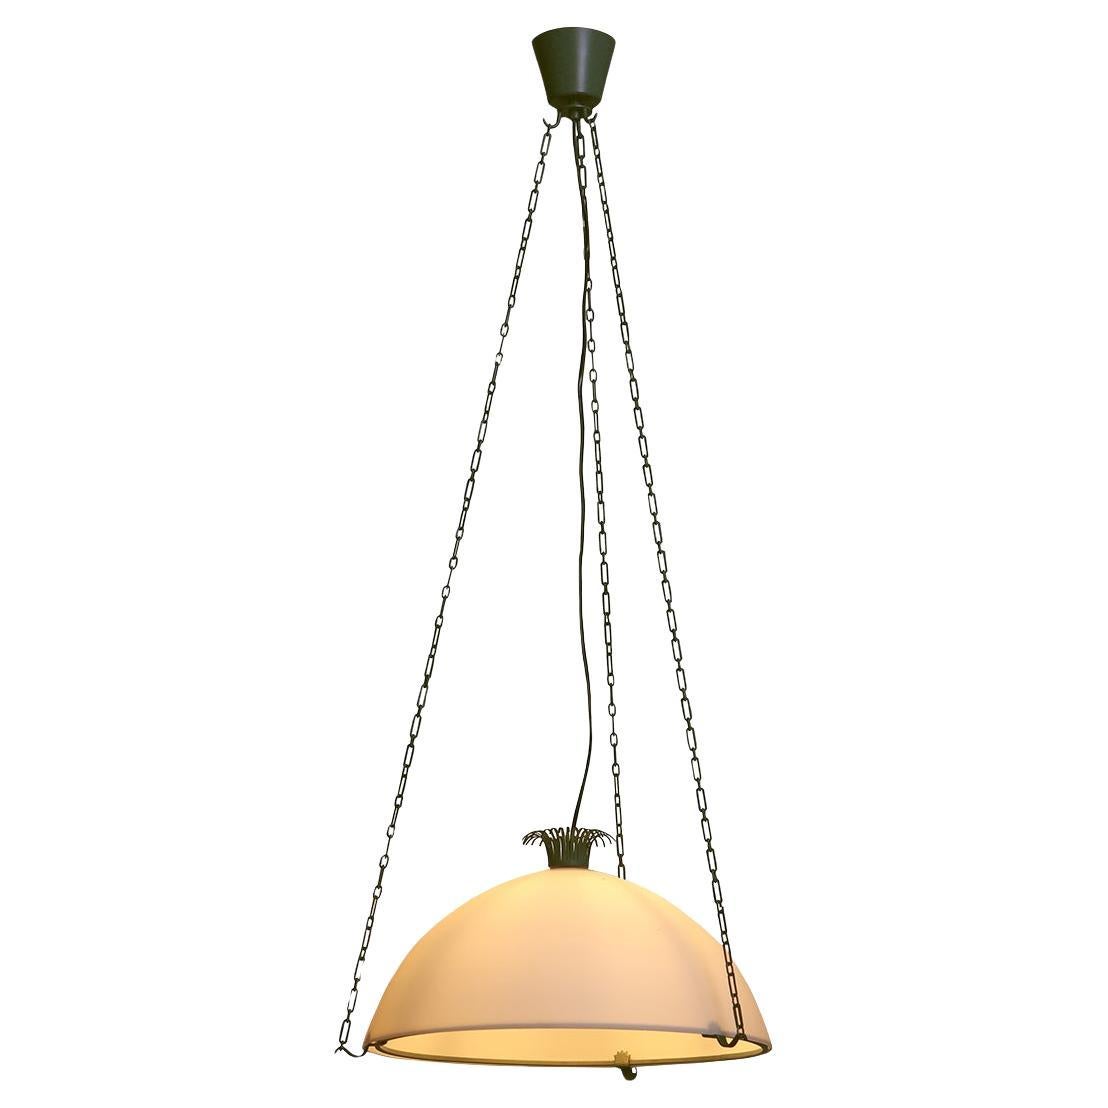 Original Erik Gunnar Asplund "Parachute" Ceiling Lamp in Glass and Steel, 1959 For Sale